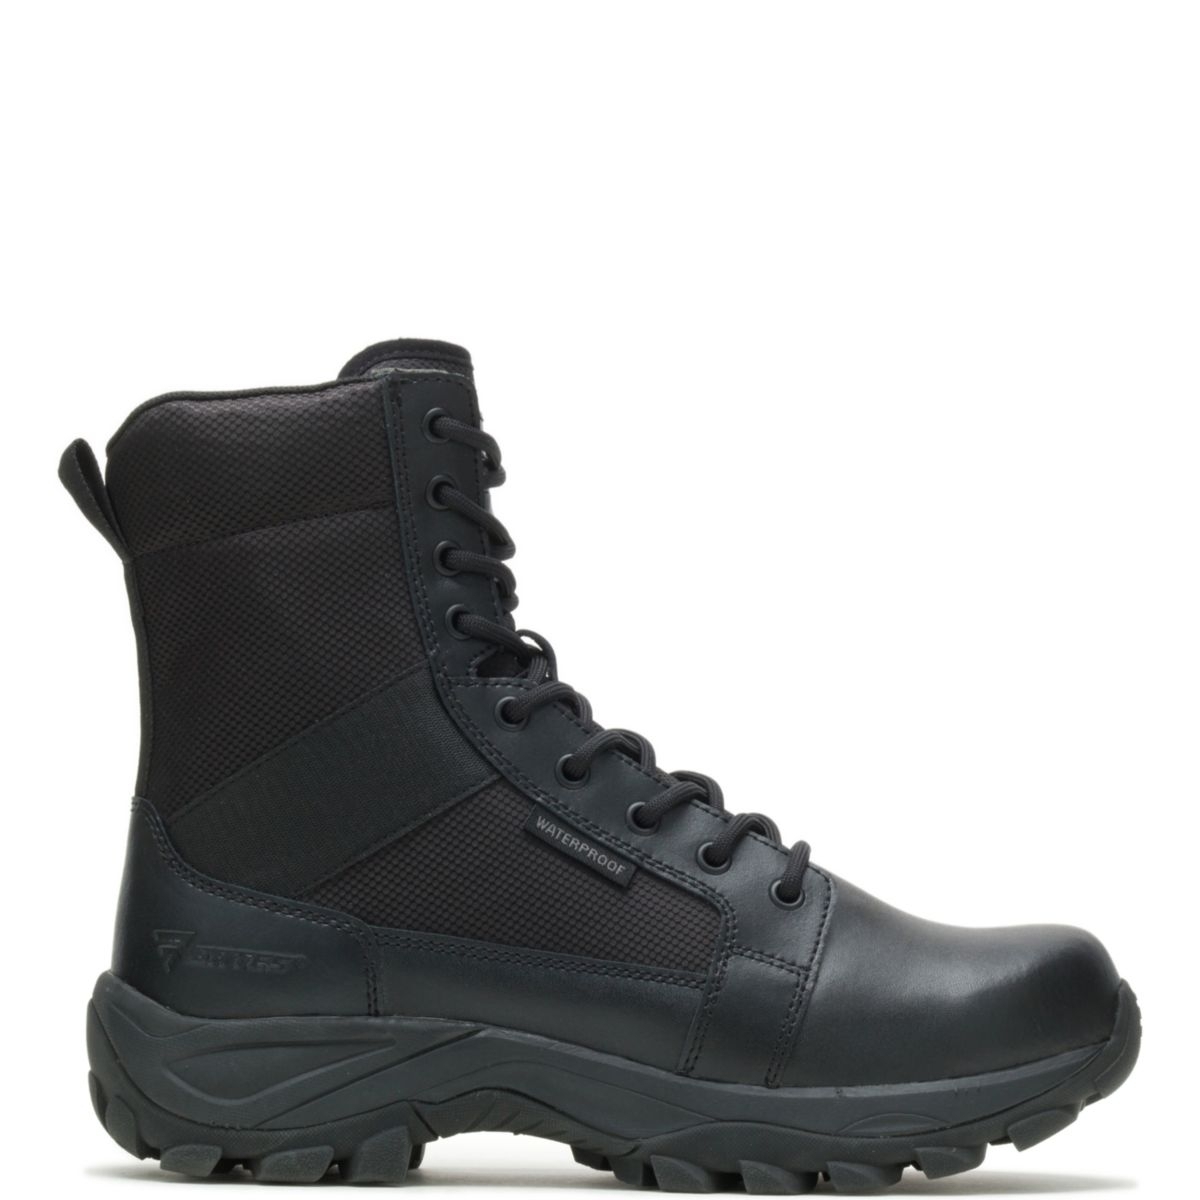 Bates Men's Fuse 8-inch Side Zip Waterproof Boot Black - E06508 BLACK - BLACK, 13